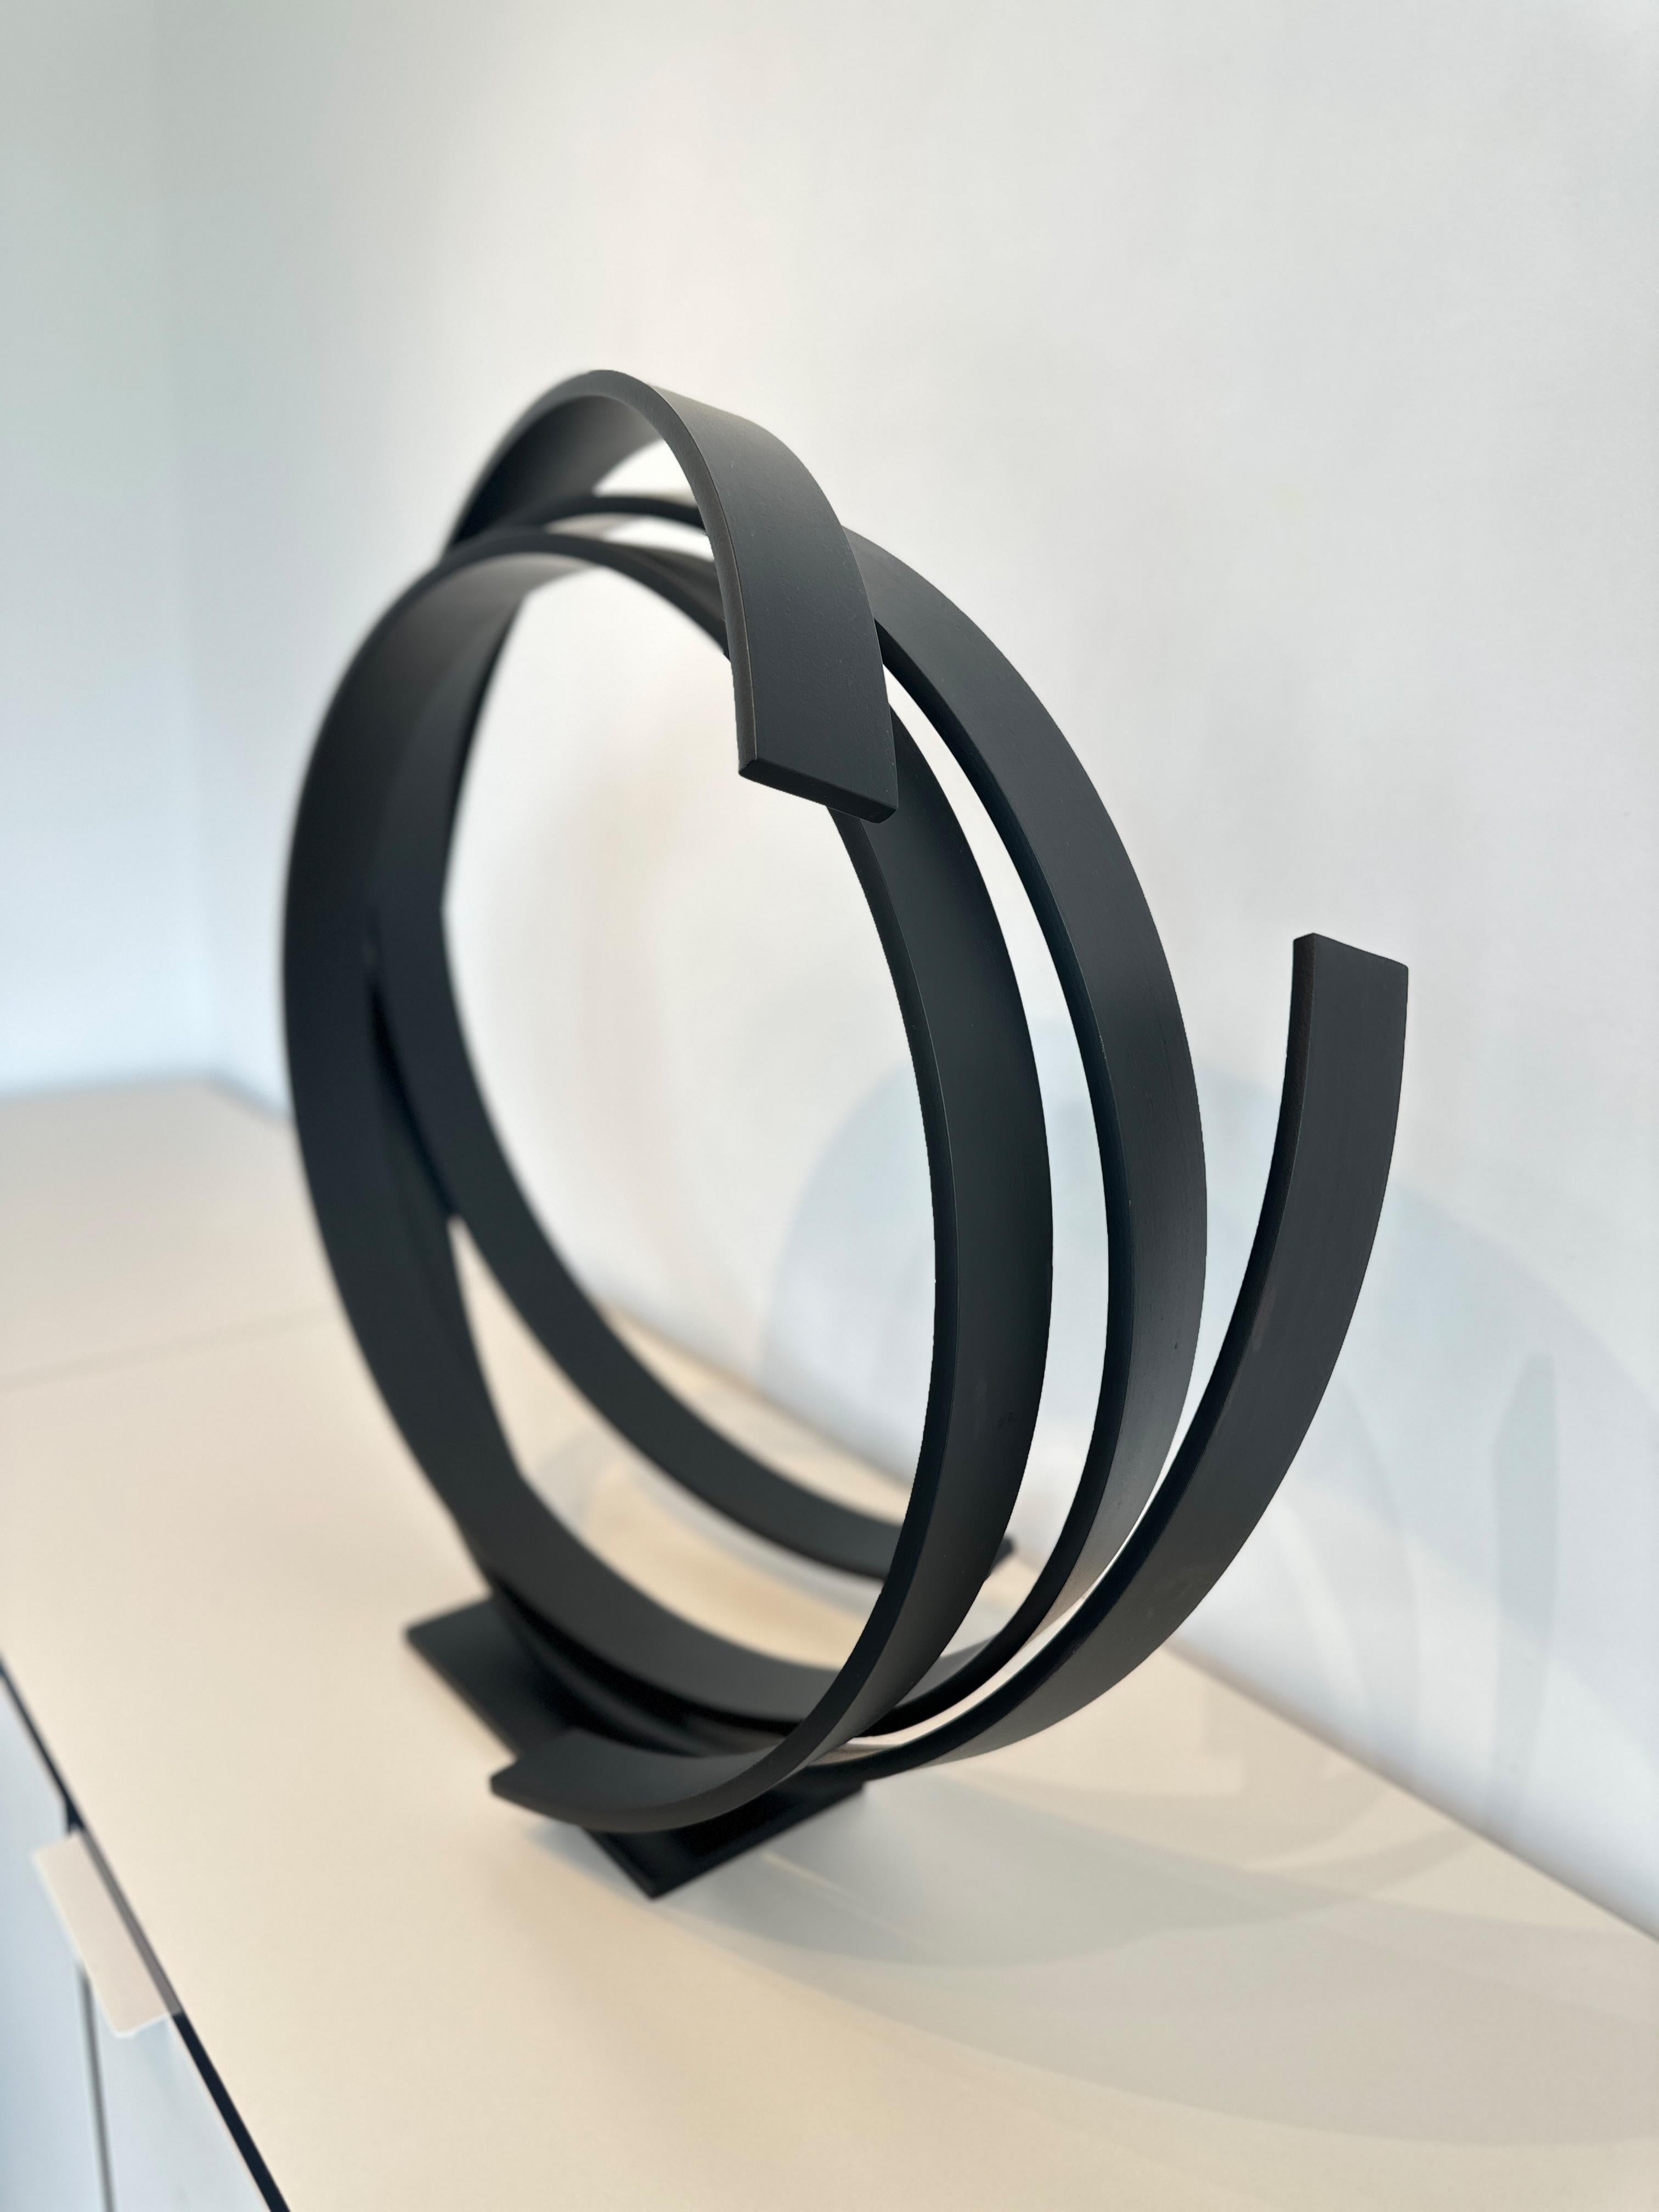 Black Orbit by Kuno Vollet - Large Contemporary Round Orbit sculpture  For Sale 9